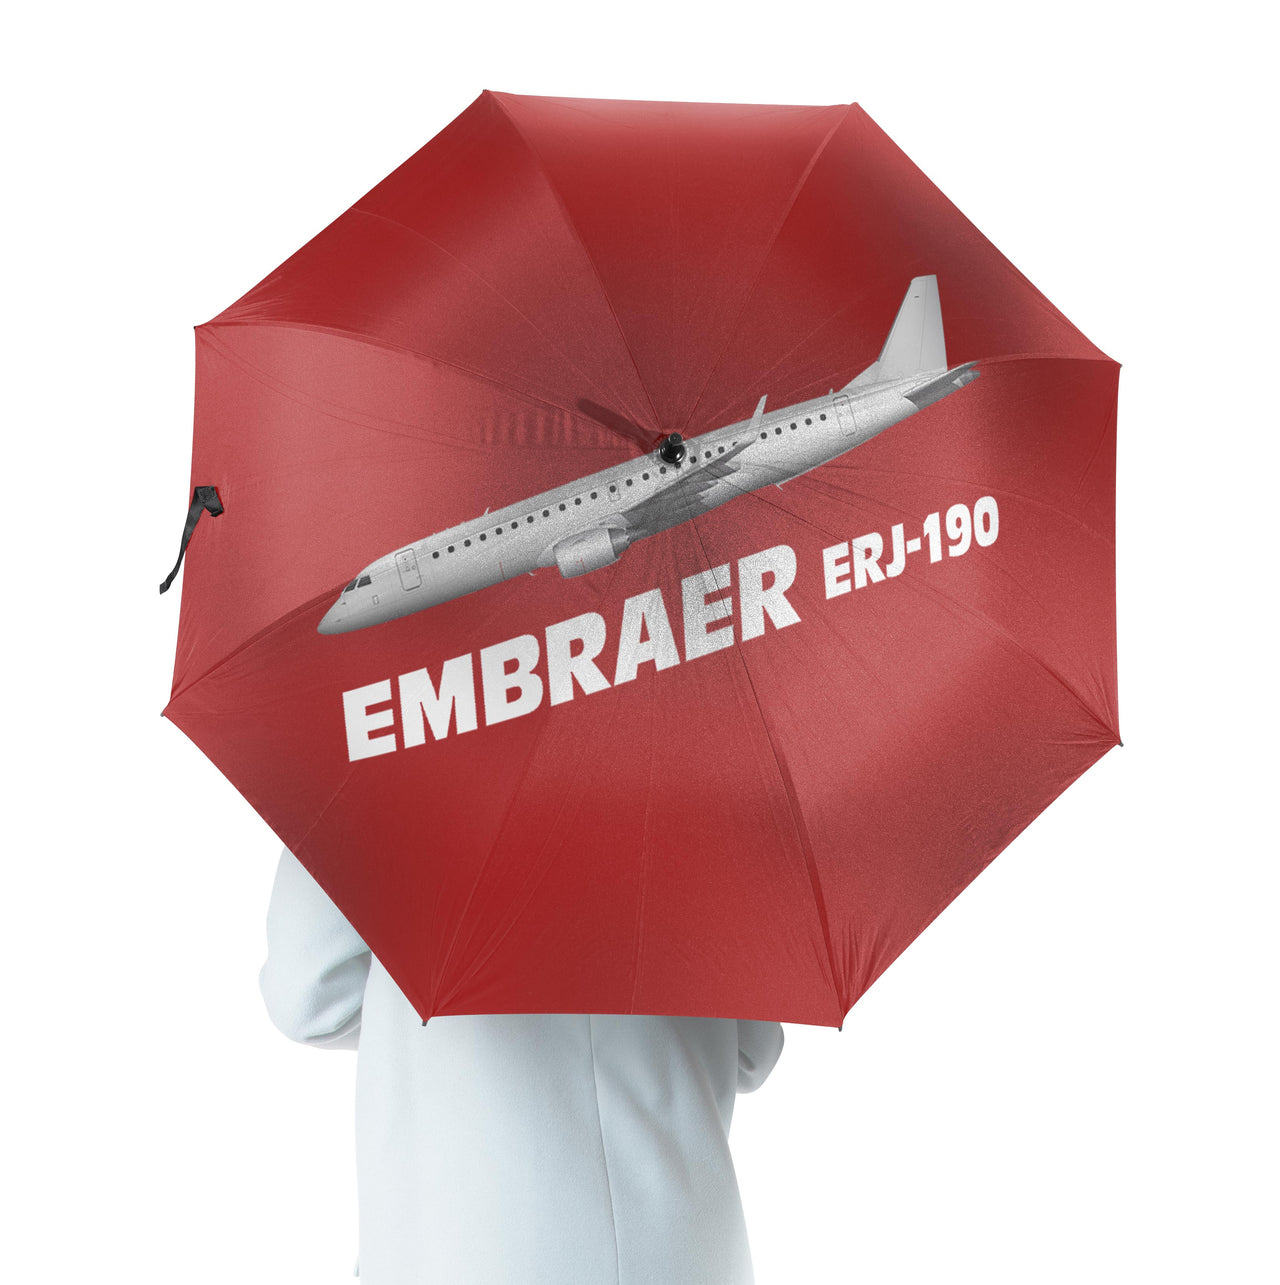 The Embraer ERJ-190 Designed Umbrella